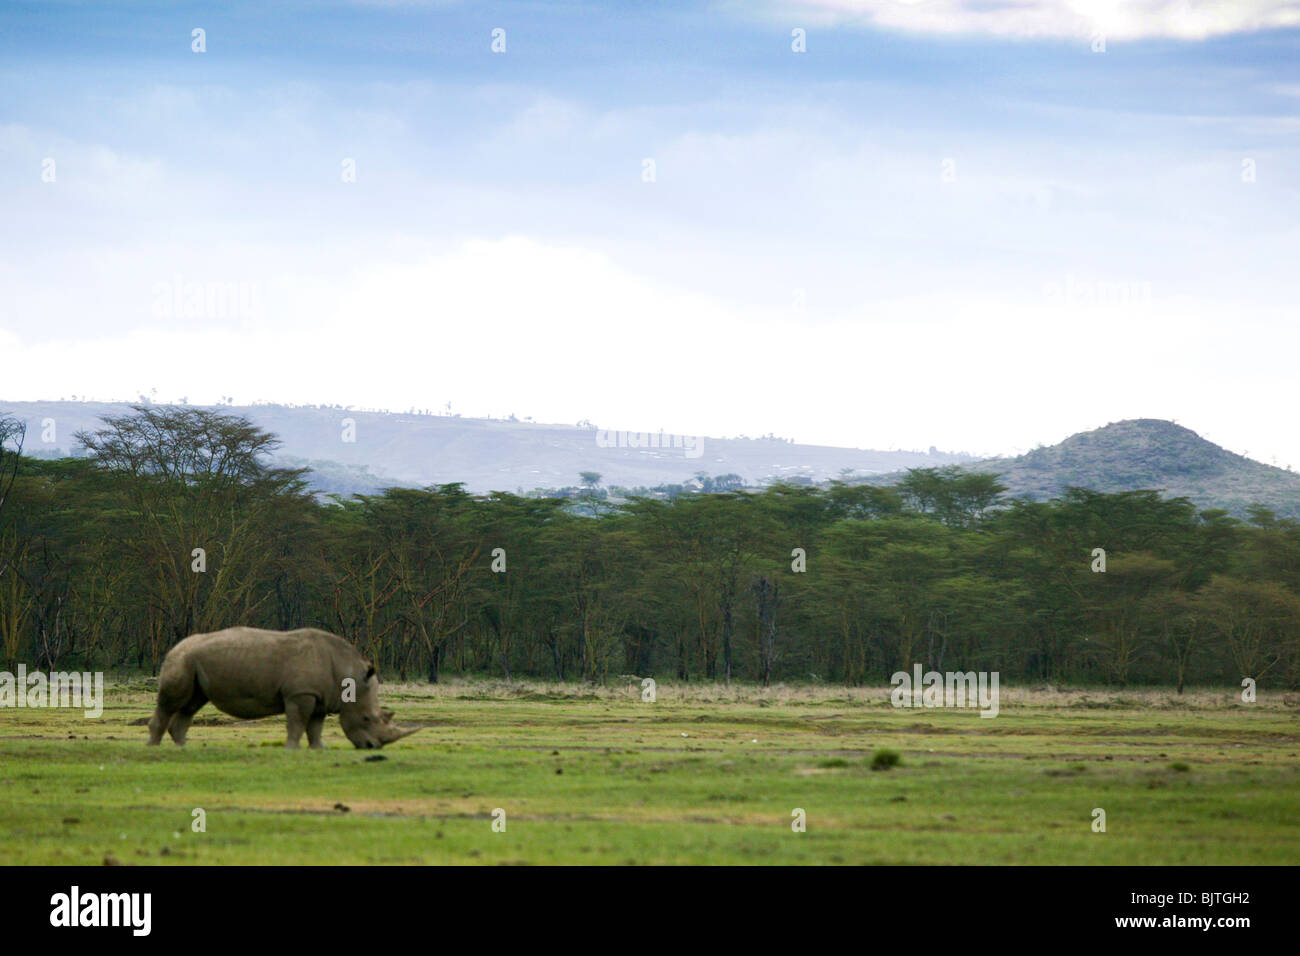 Rhinoceros on the African safari Stock Photo